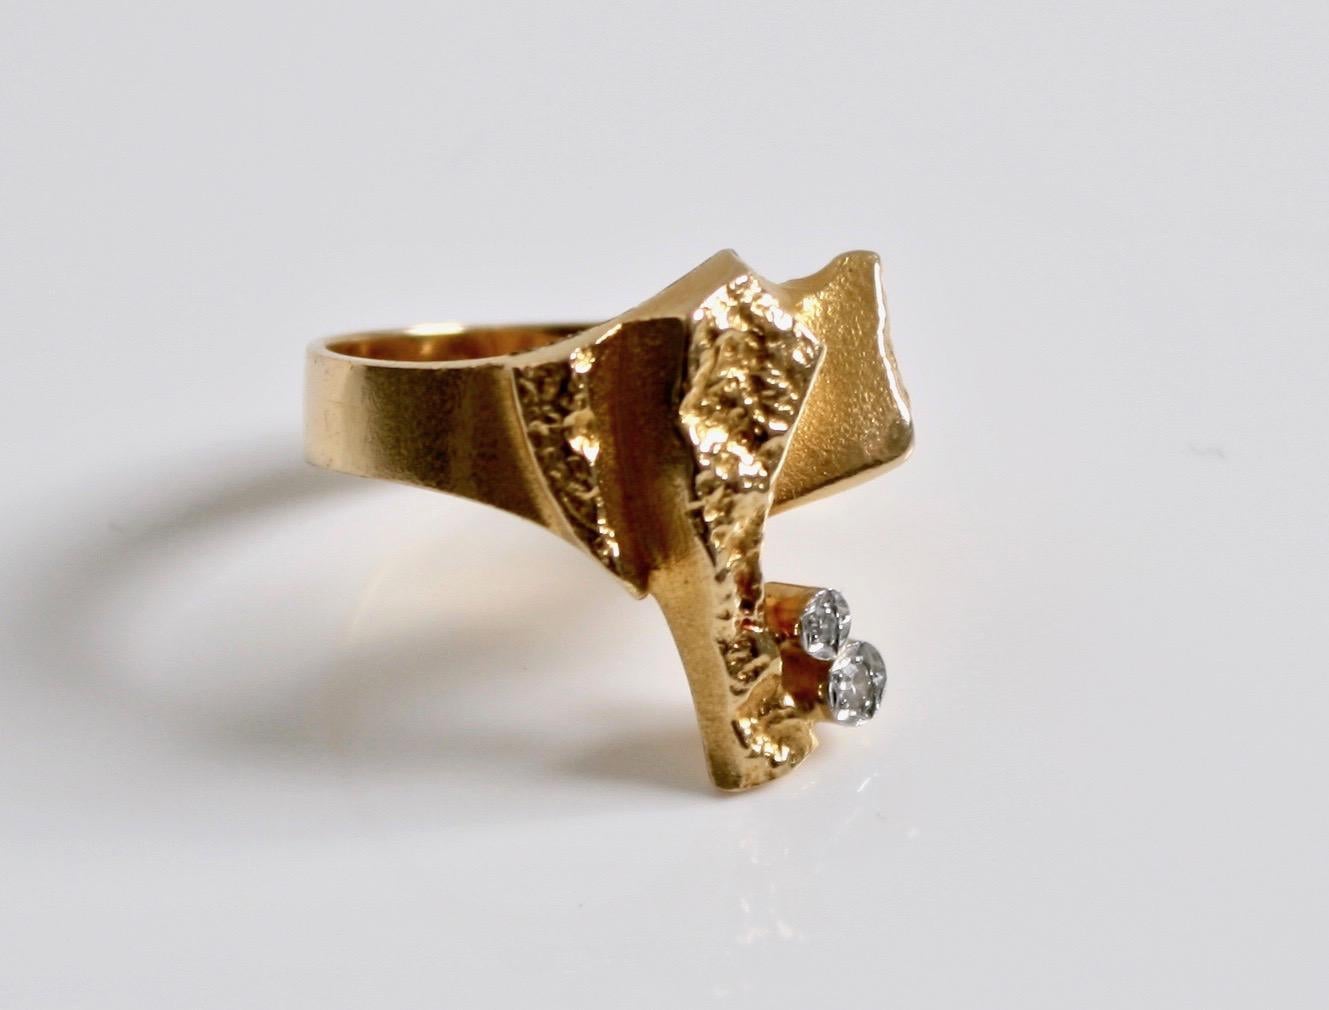 Modernist Bjorn Weckstrom Design, 14k Yellow Gold & Diamond Ring by Lapponia Finland